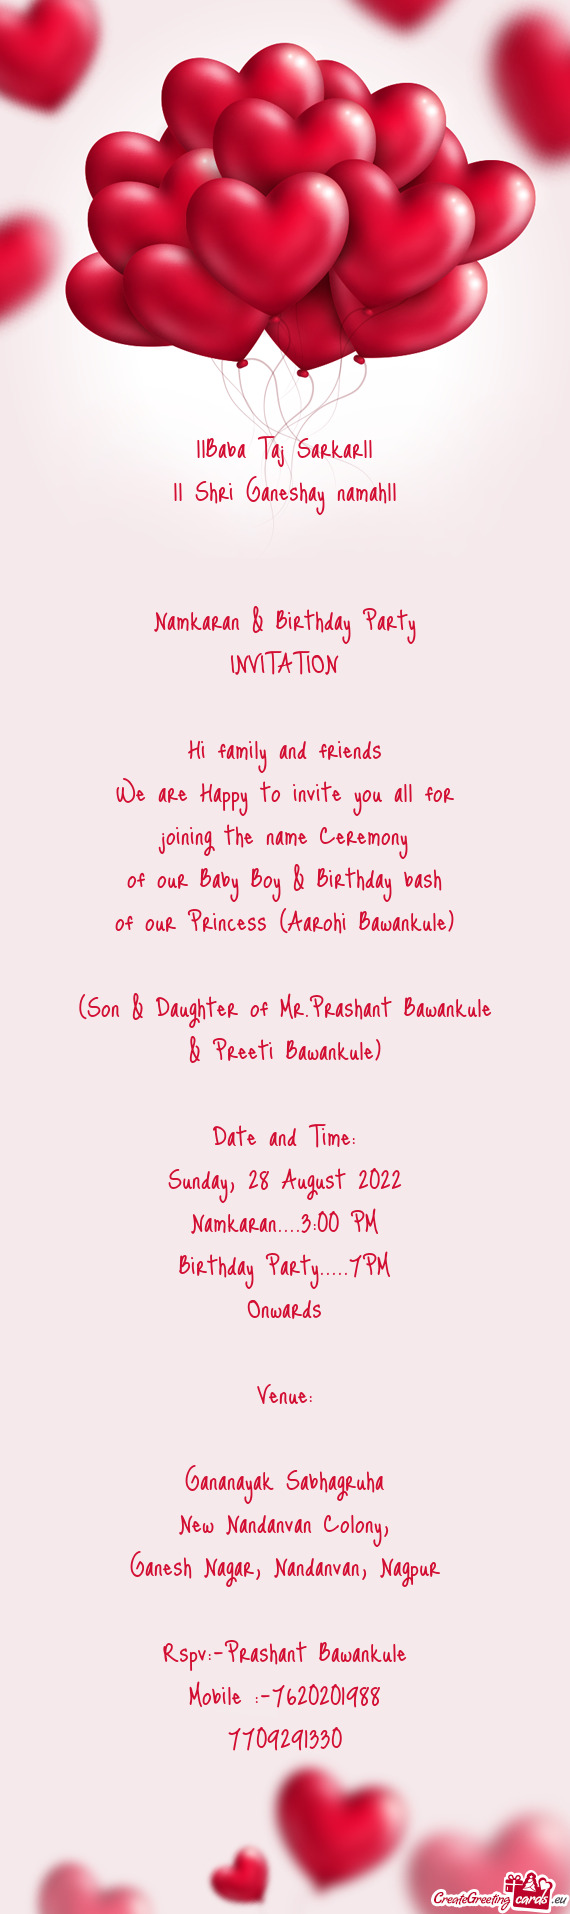 Namkaran & Birthday Party